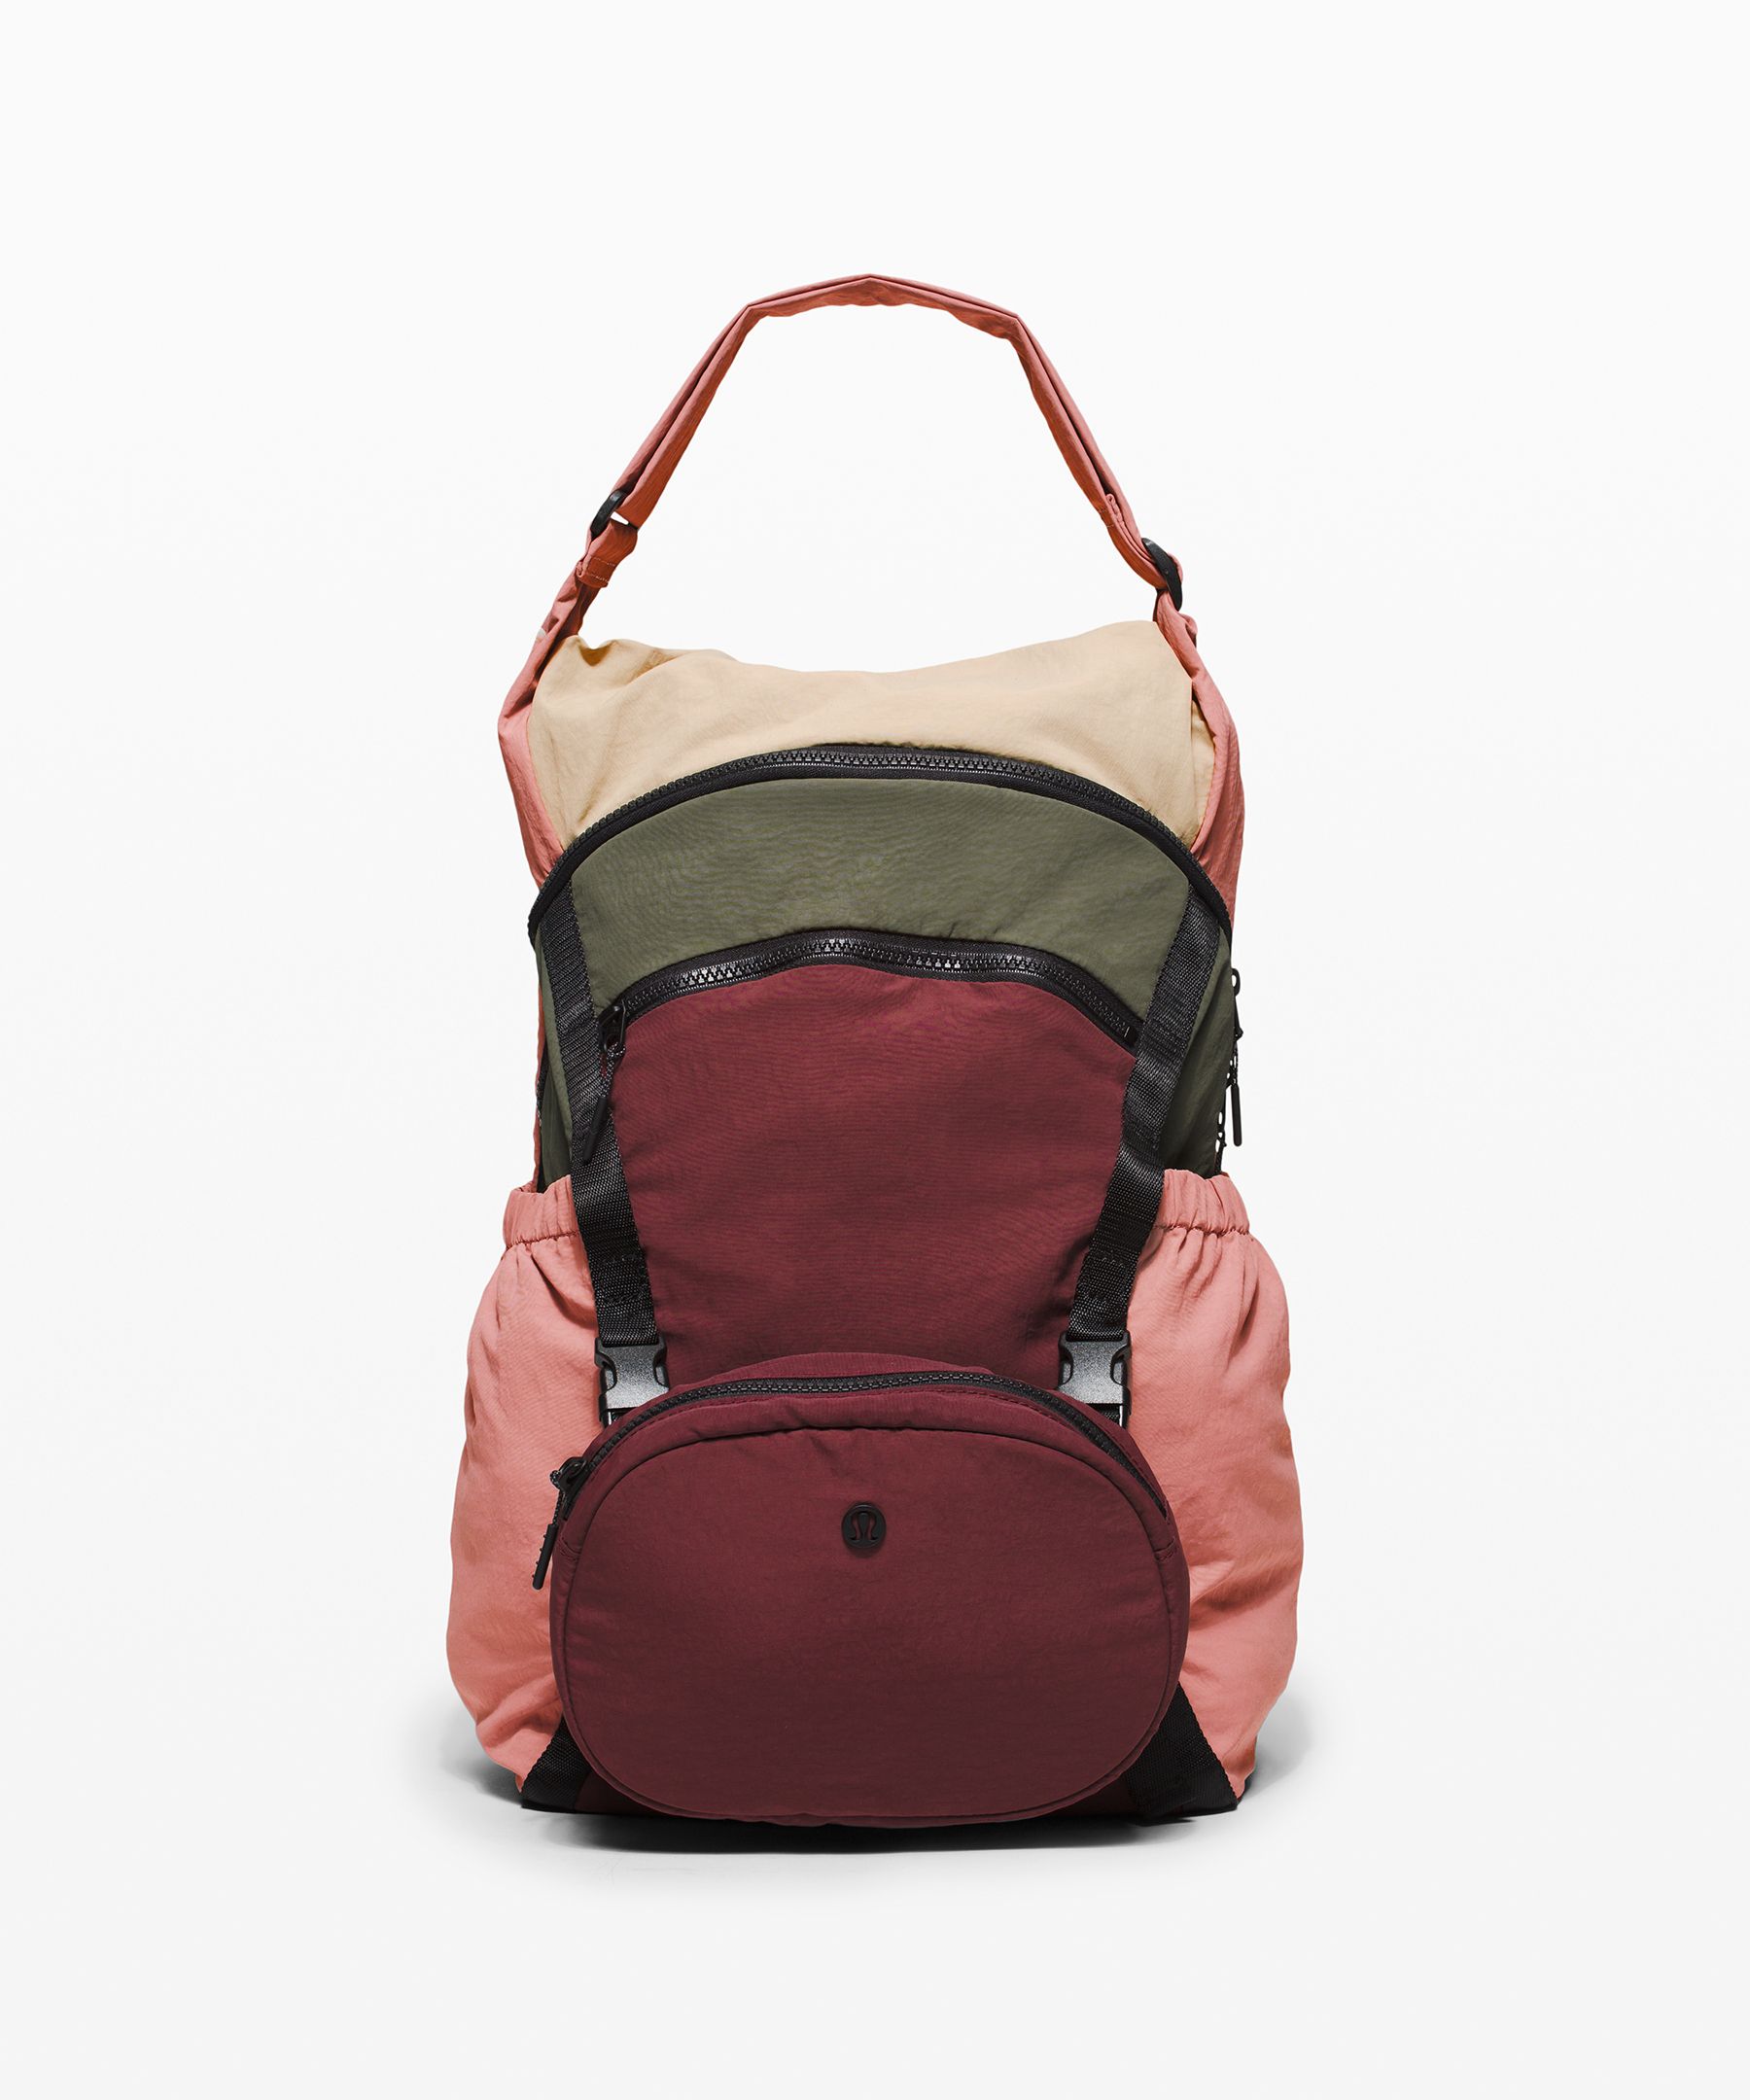 lululemon backpack